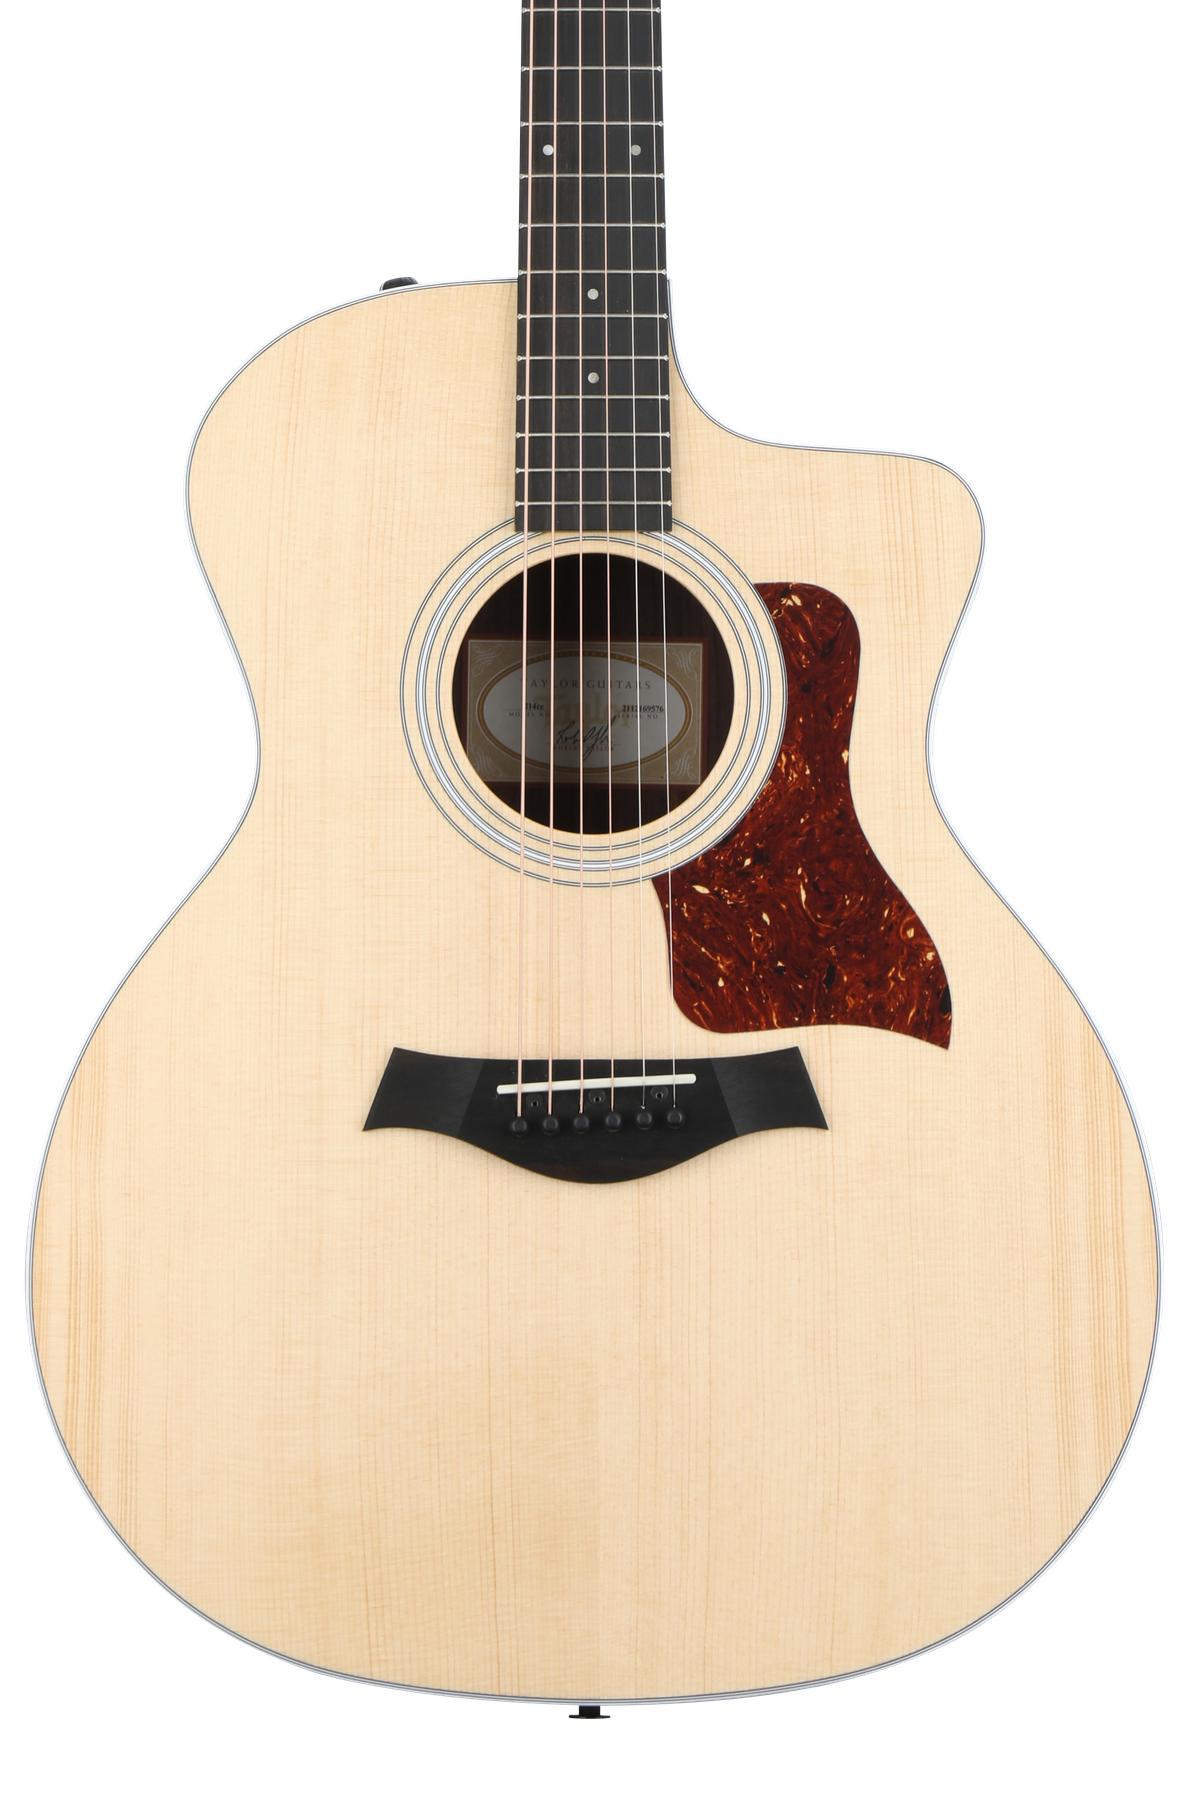 Taylor Acoustic Guitar